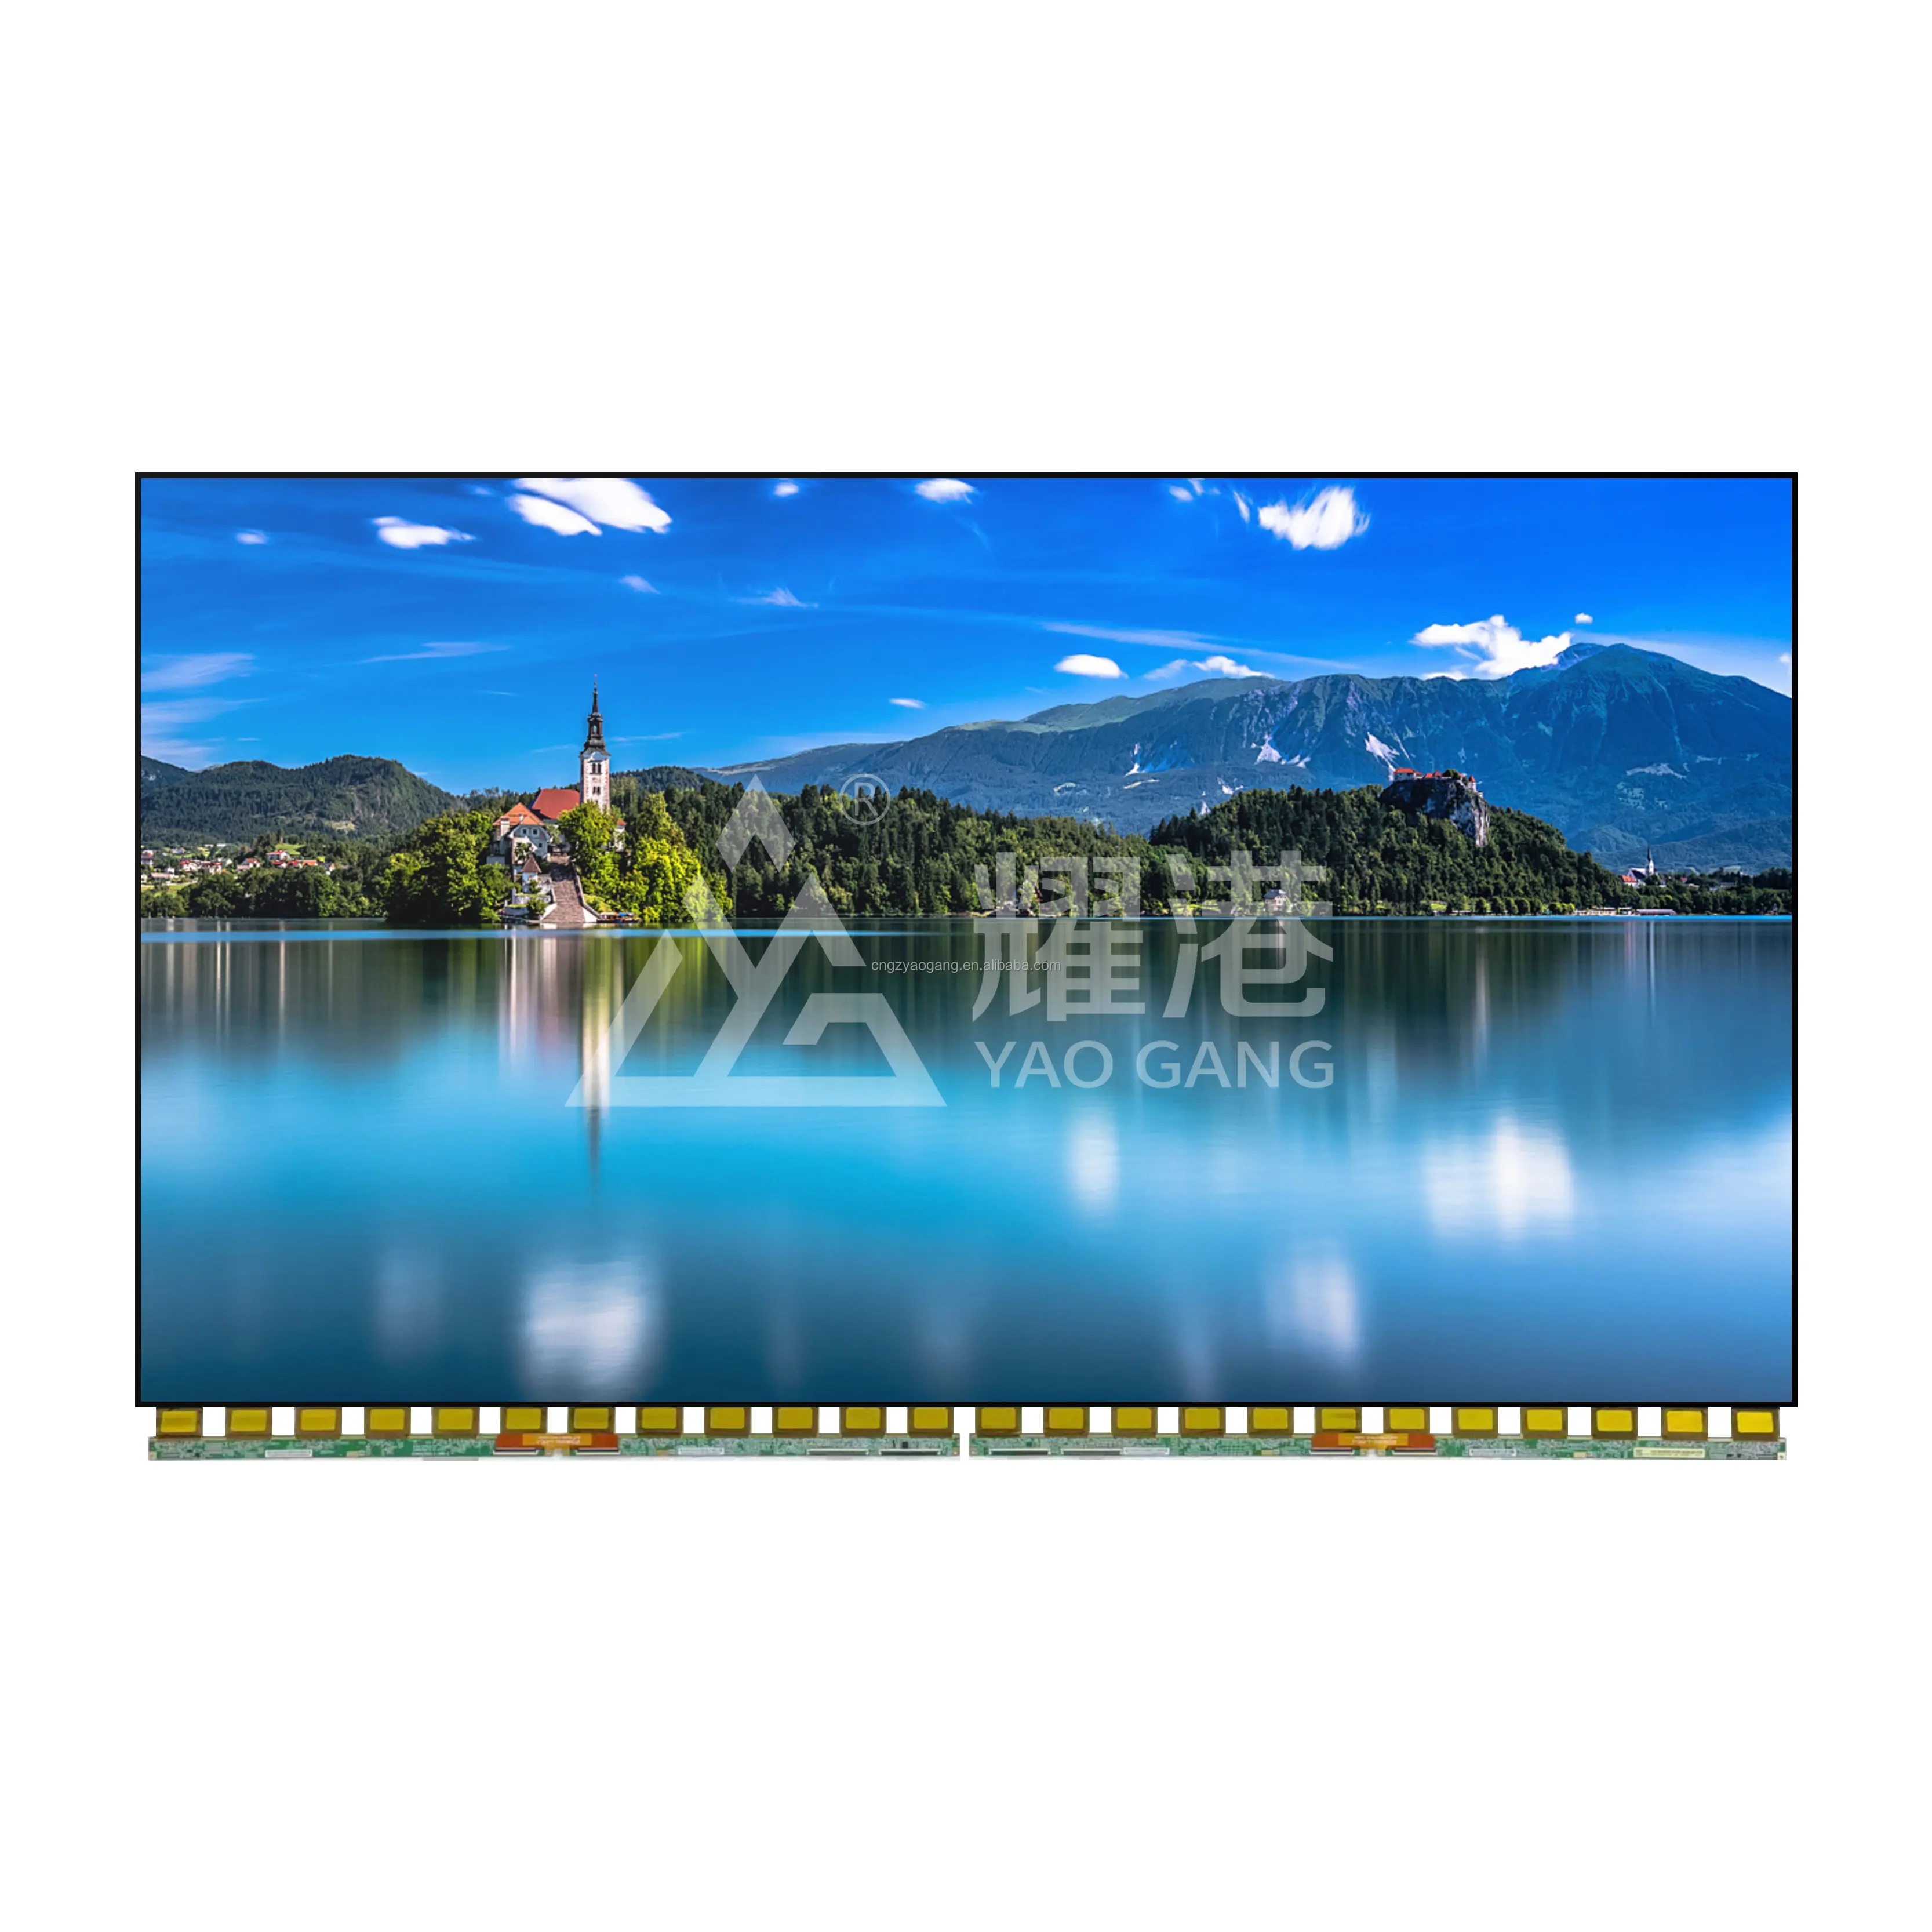 ST6451E02-1 새로운 스타일 CSOT LG BOE HKC A 급 LCD 스마트 TV 화면 디스플레이 패널 오픈 셀 TV 교체 예비 부품